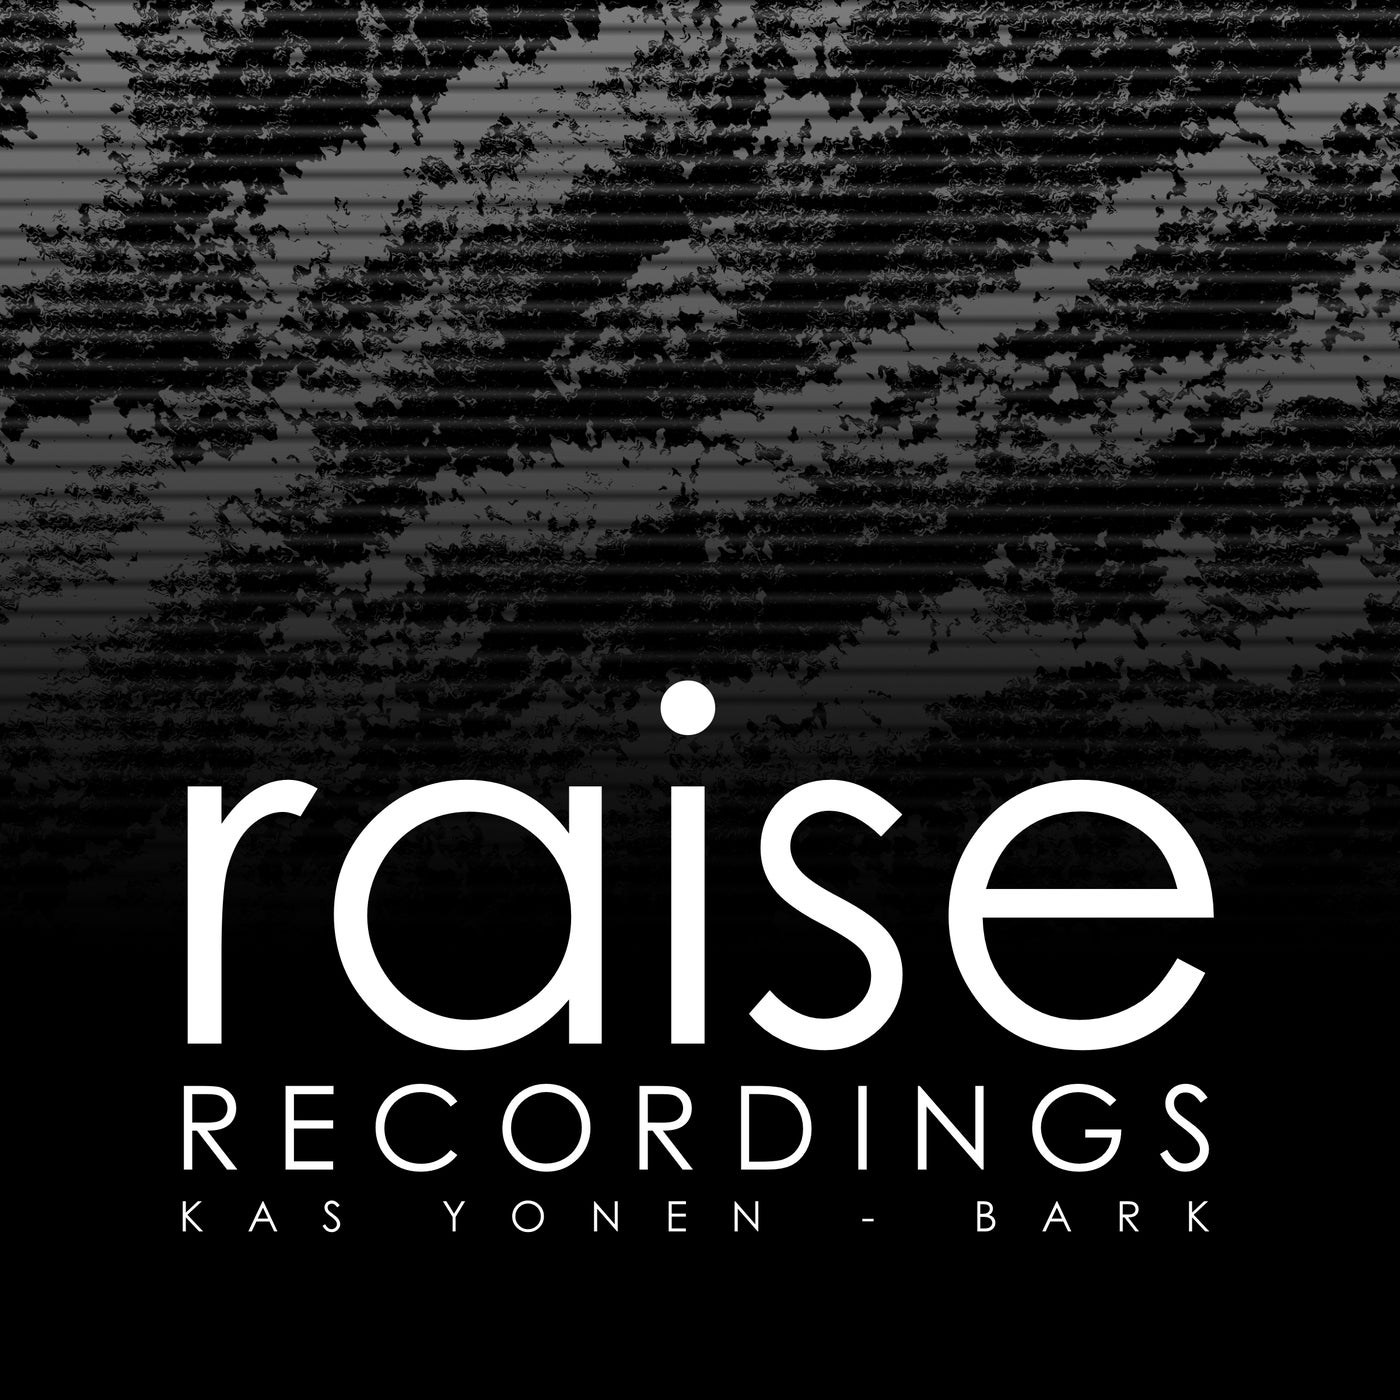 Kas Yonen – Bark [RAISE632]